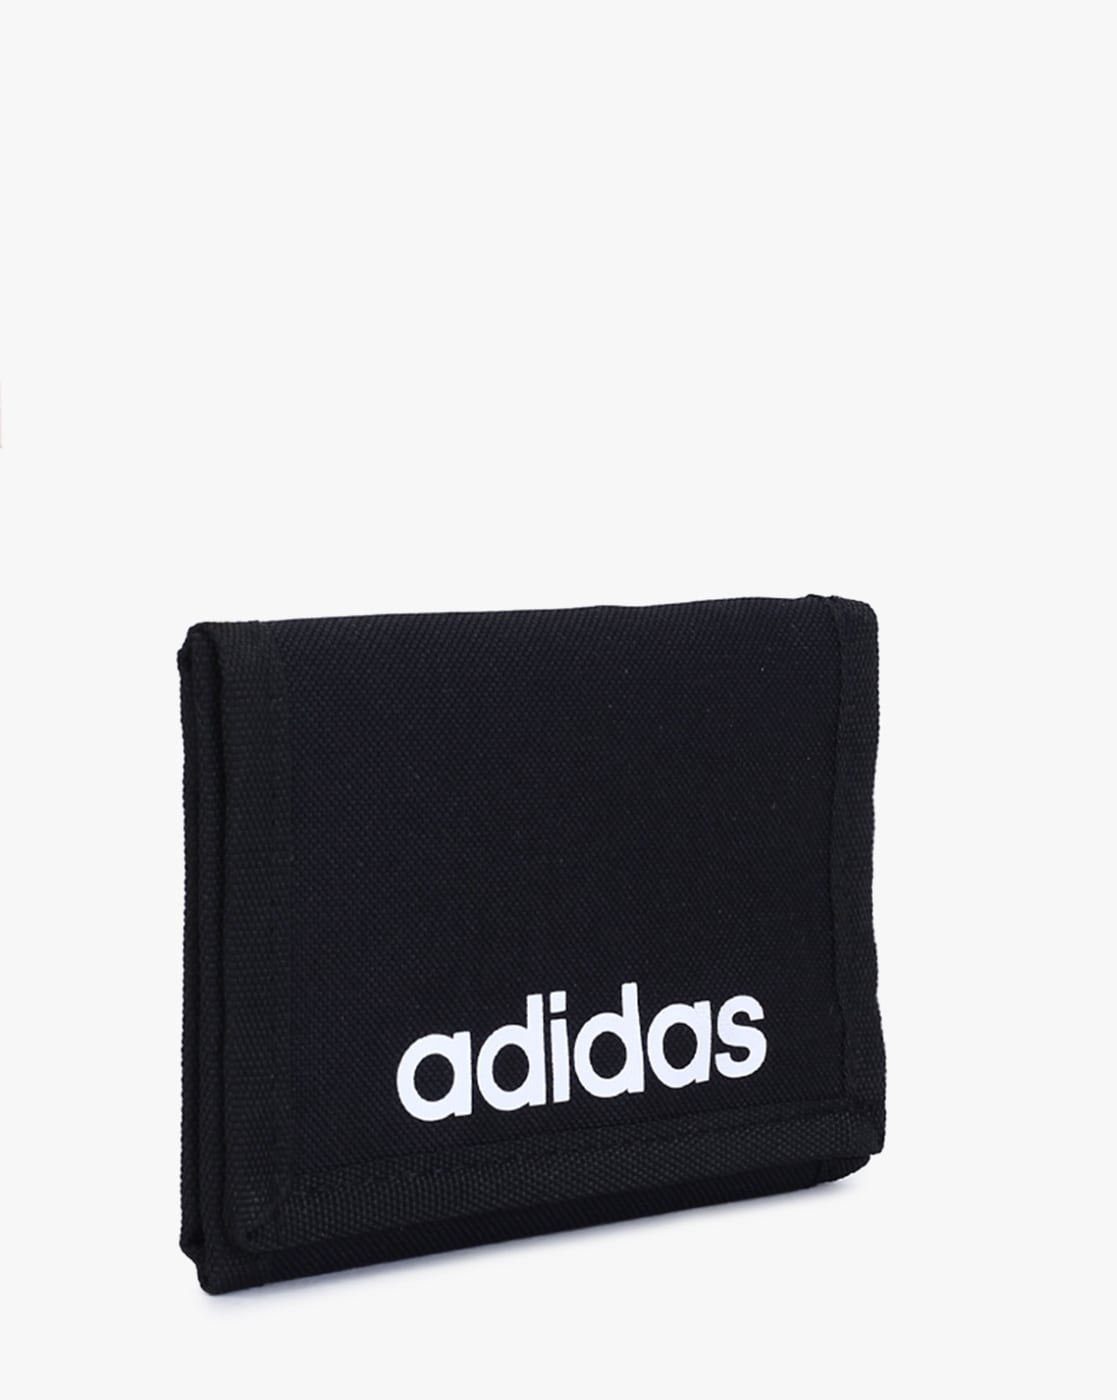 adidas wallet price